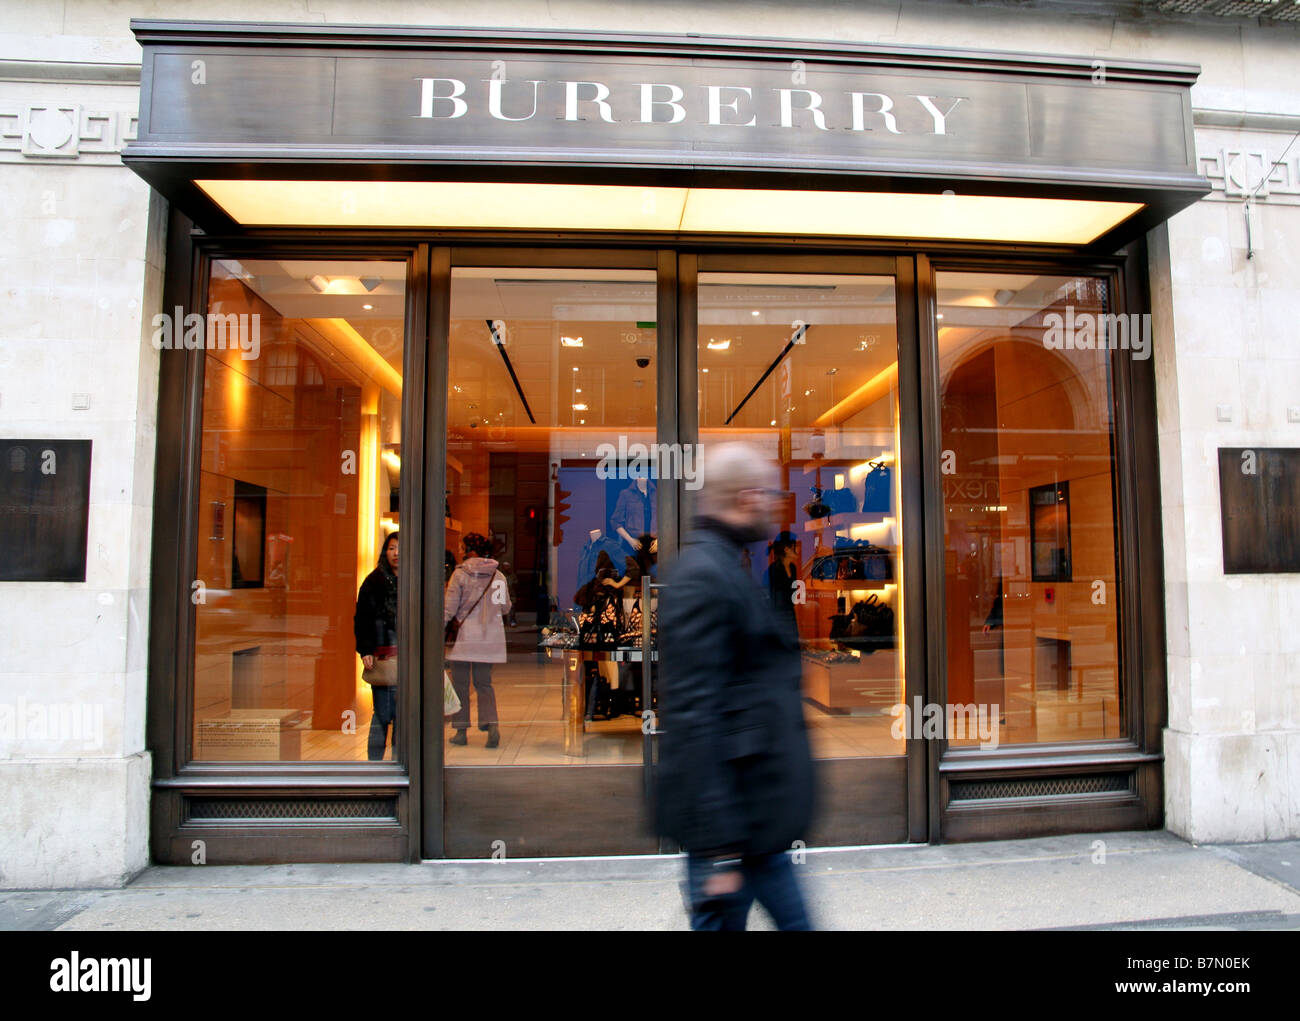 Burberry store in Regent Street, London Stock Photo - Alamy